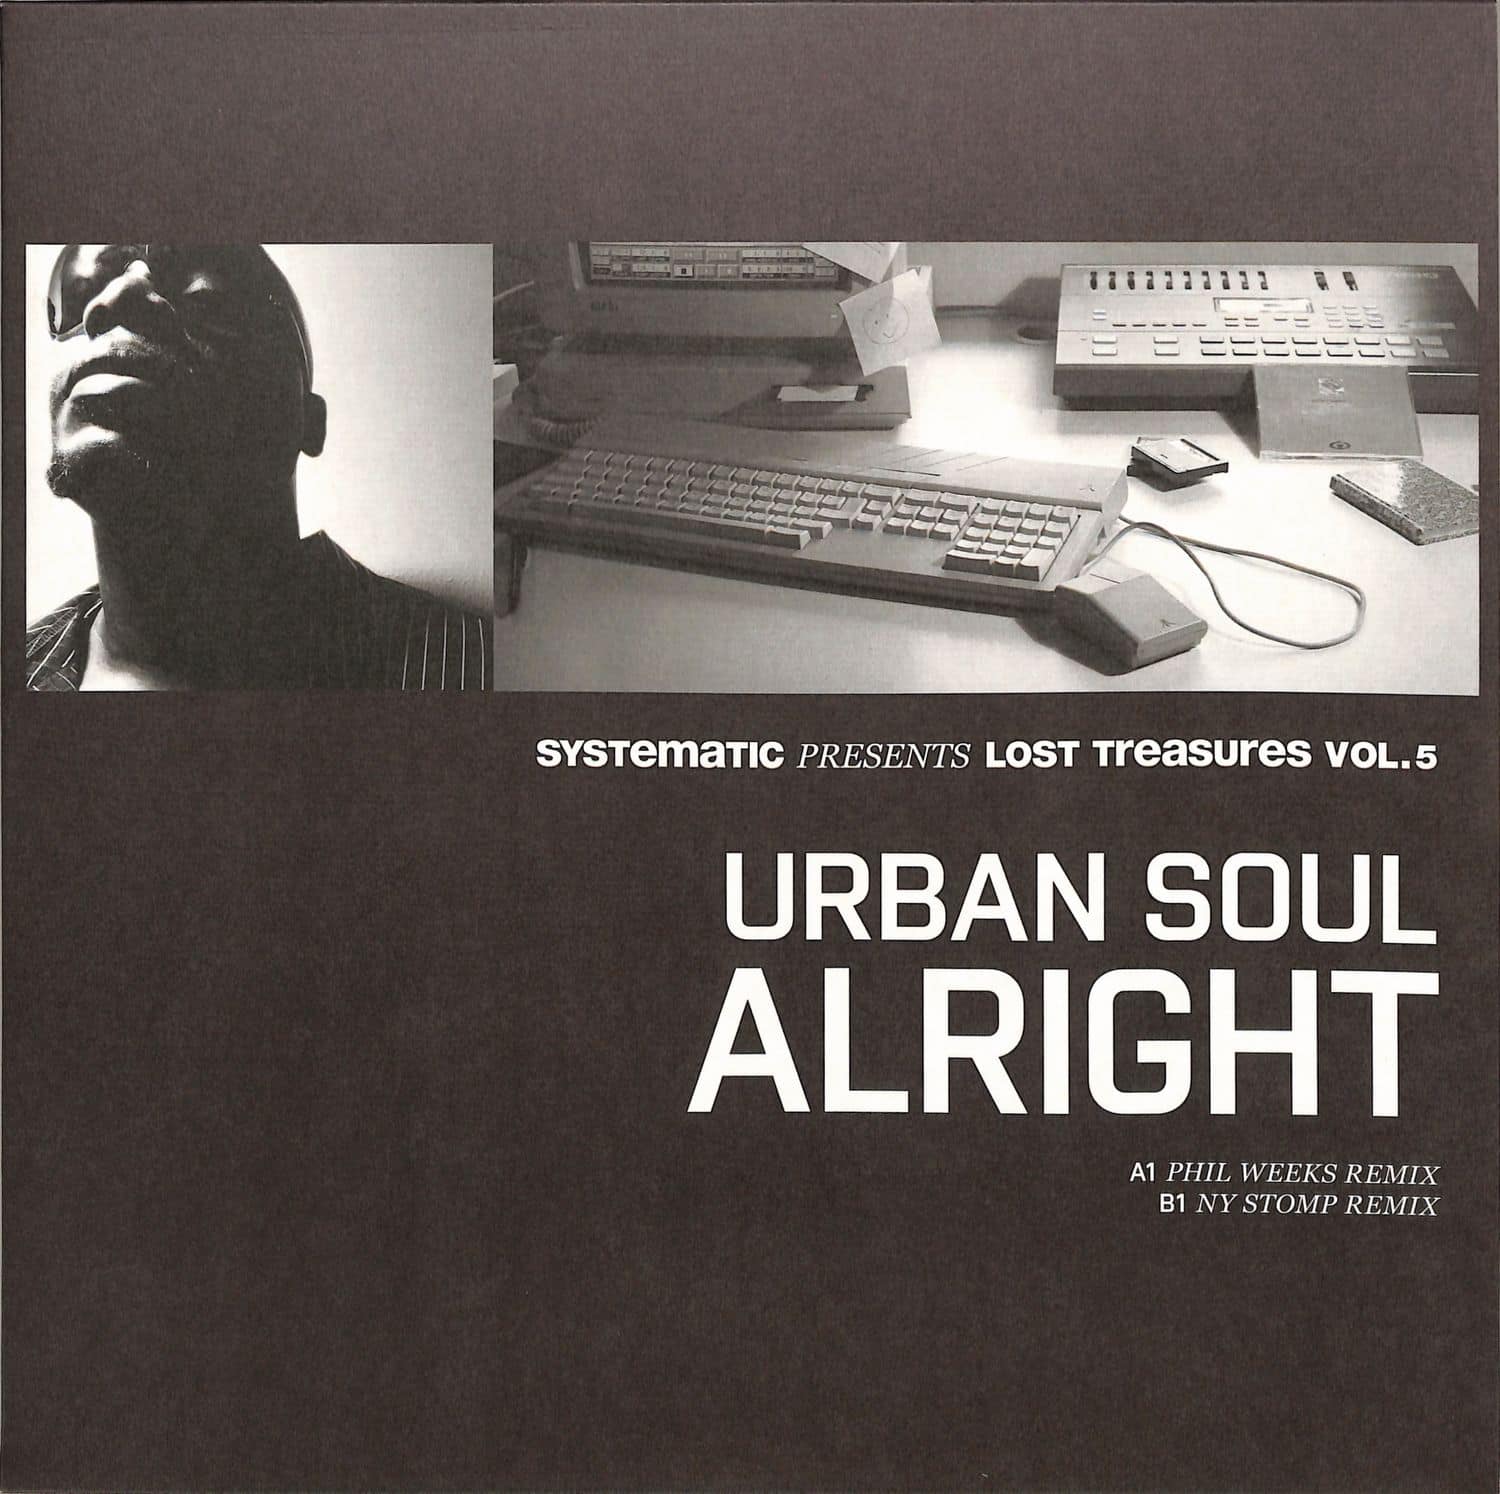 Urban Soul - ALRIGHT 